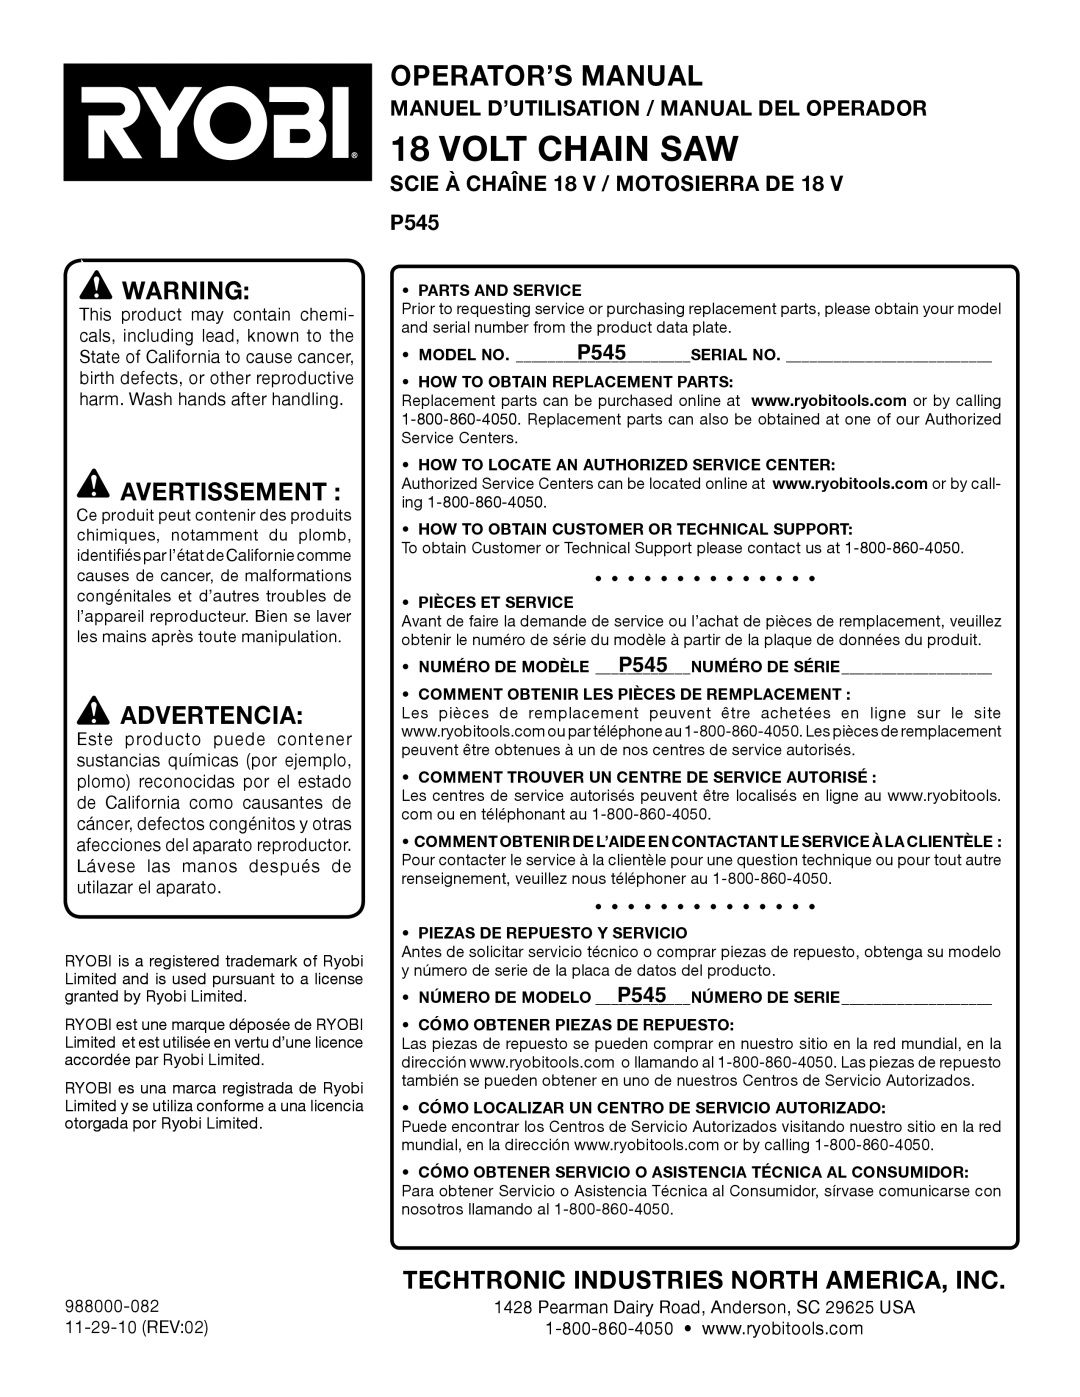 Ryobi P545 Operator’S Manual, Avertissement , Advertencia, Techtronic Industries North America, Inc, Volt Chain Saw 